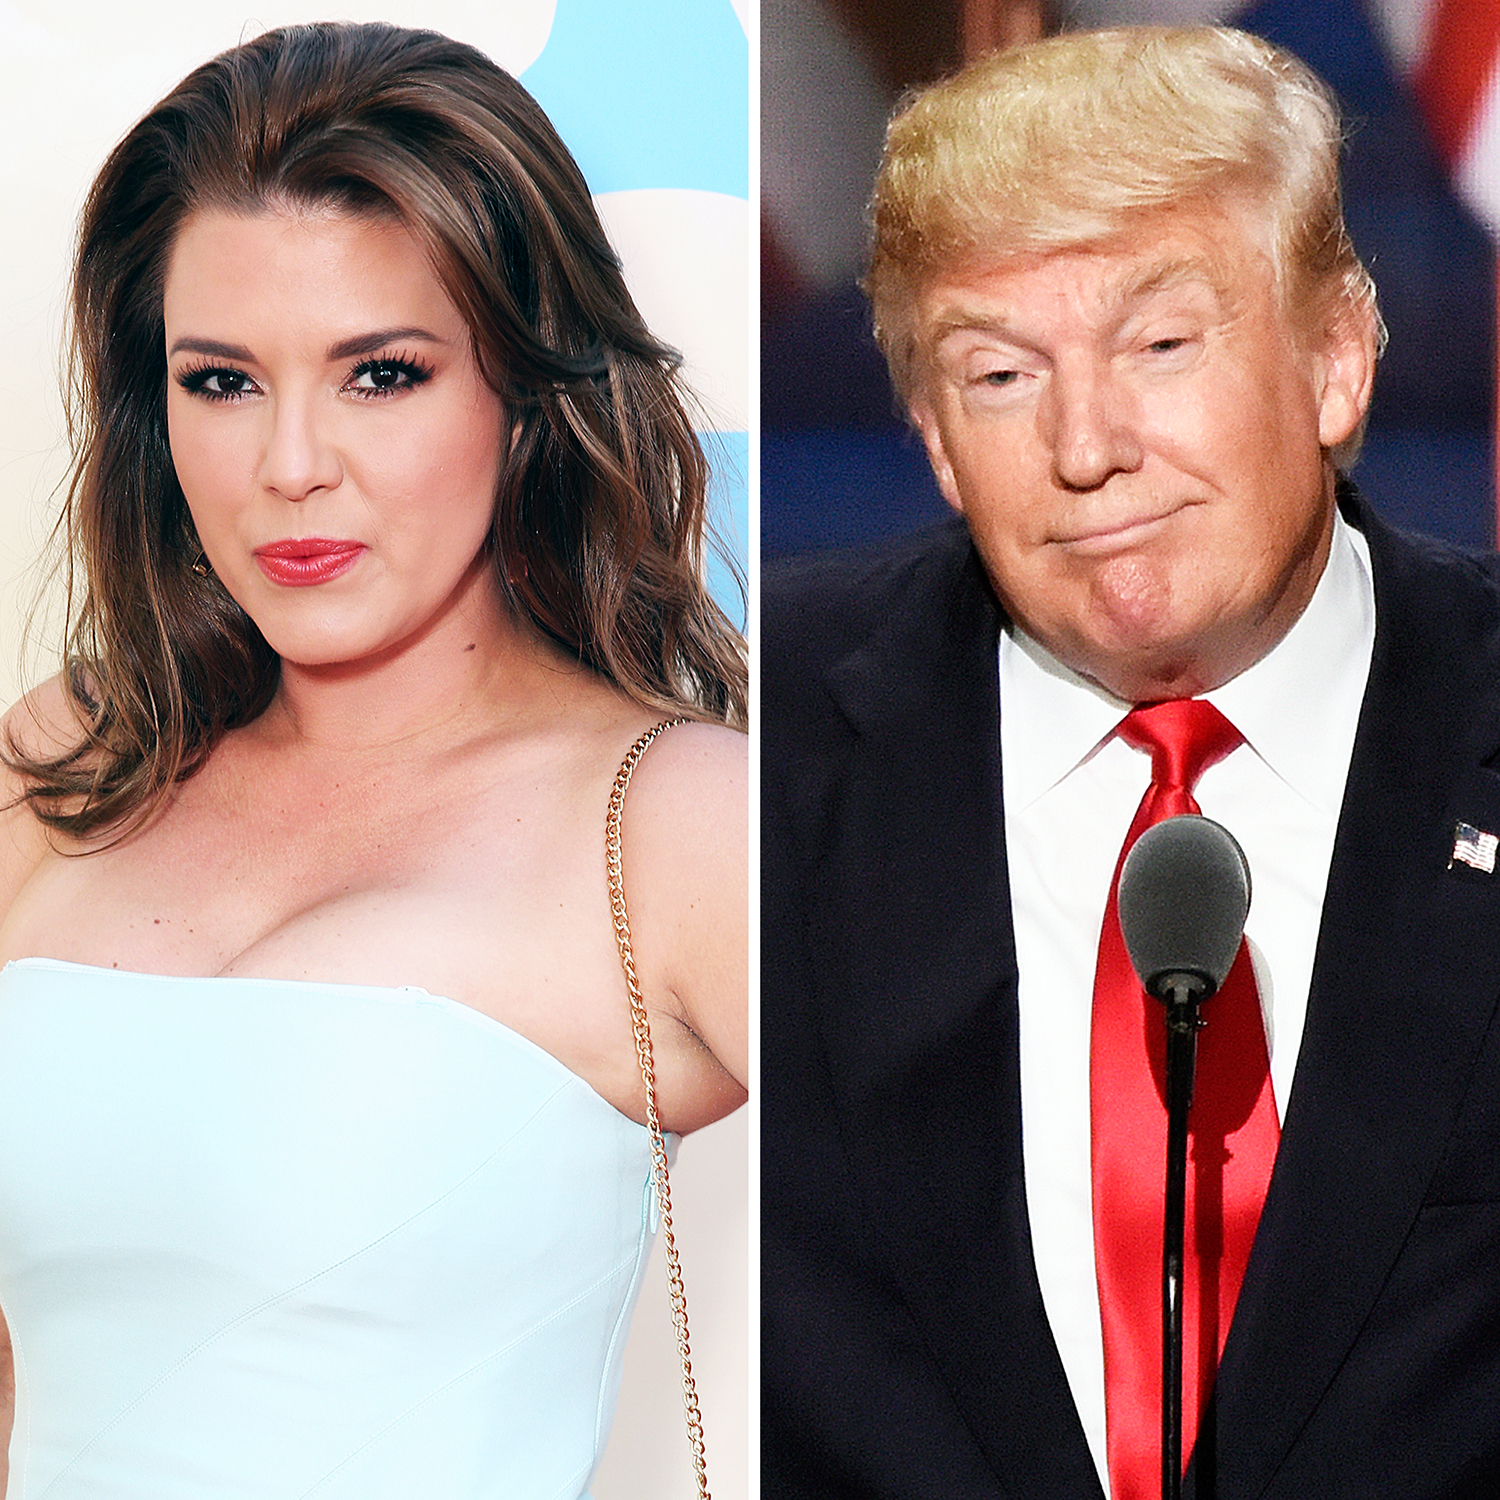 Former Miss Arizona doesnt believe Trump allegations 